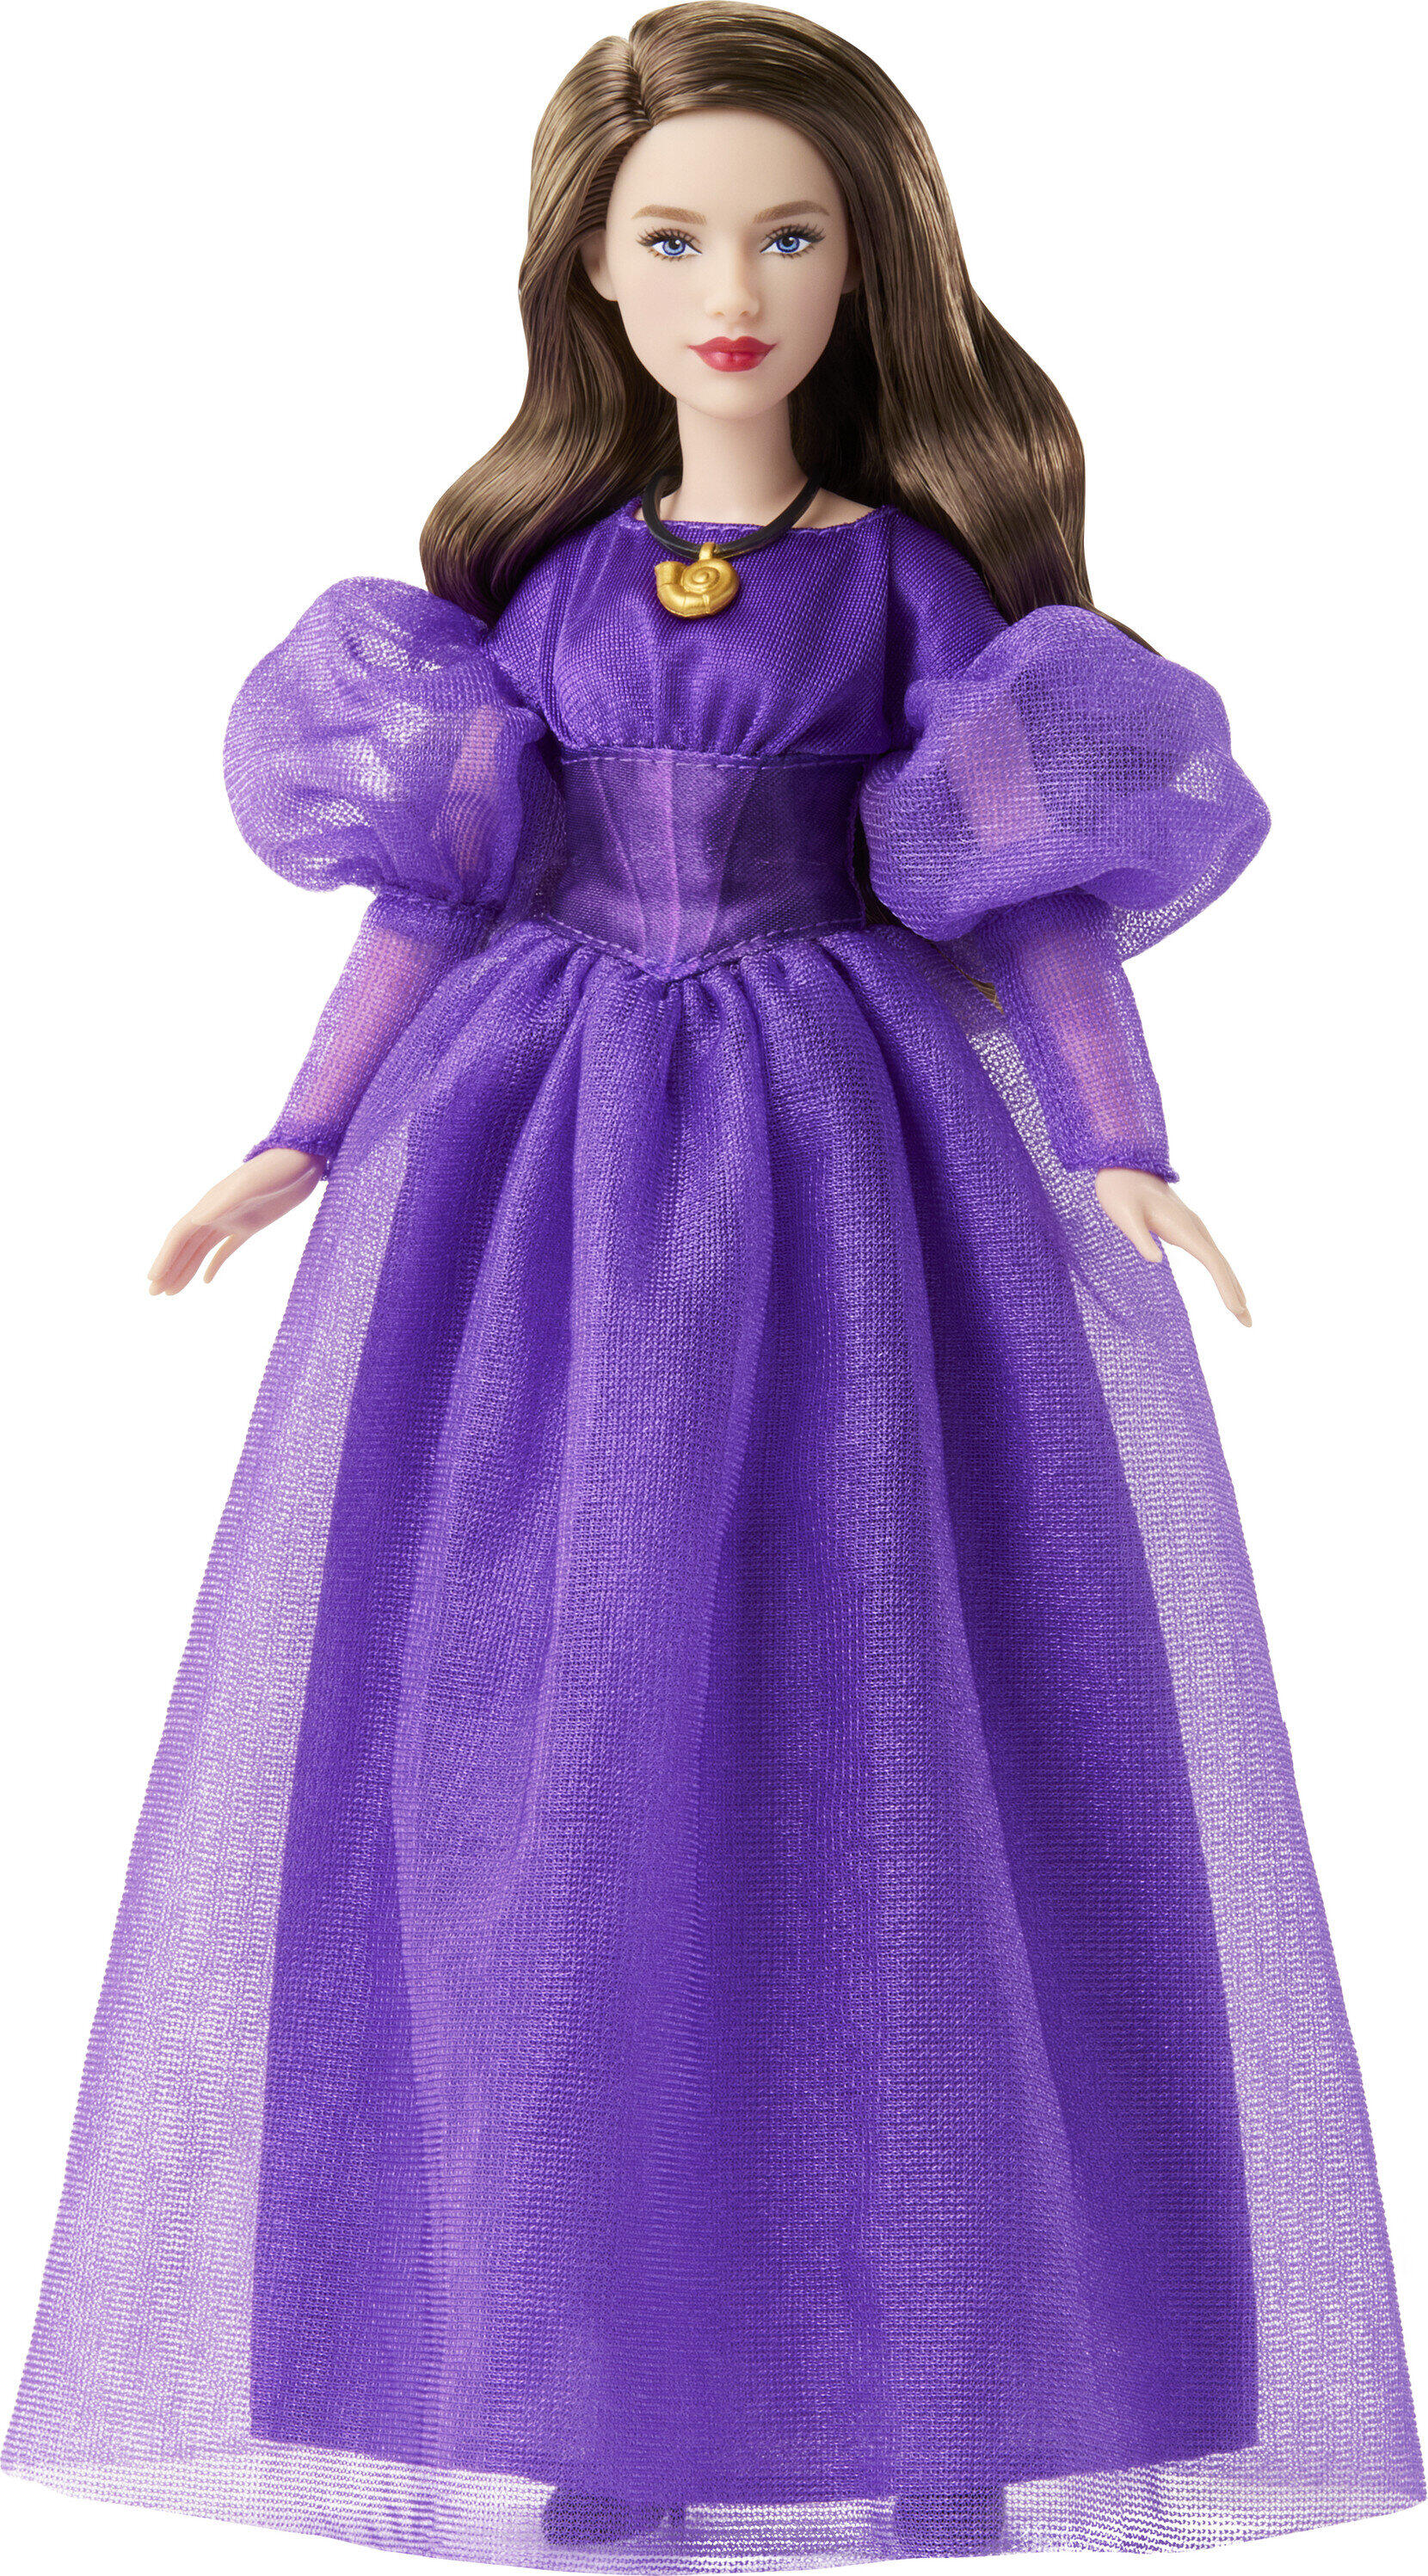 Disney The Little Mermaid Vanessa Fashion Doll in Signature Purple Dress - image 2 of 6